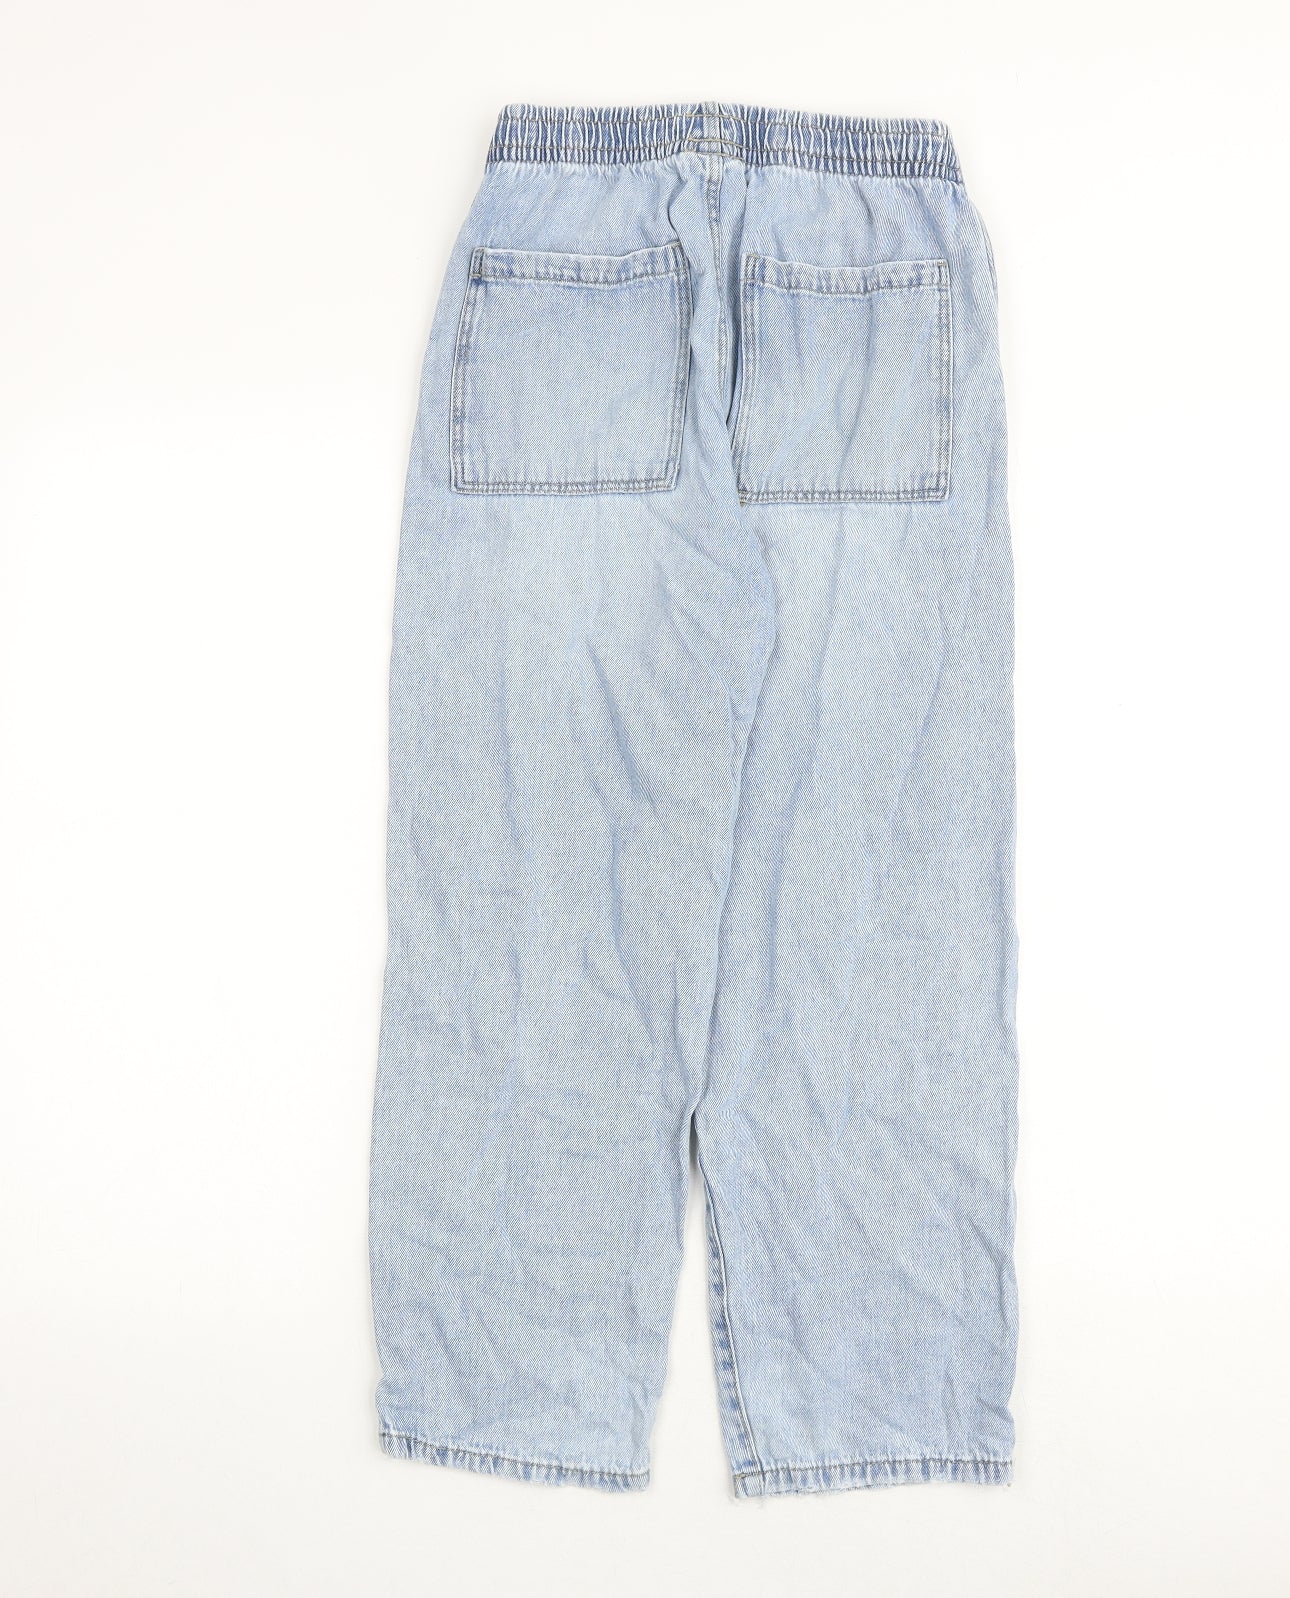 Zara Girls Blue Cotton Straight Jeans Size 13-14 Years Regular Zip